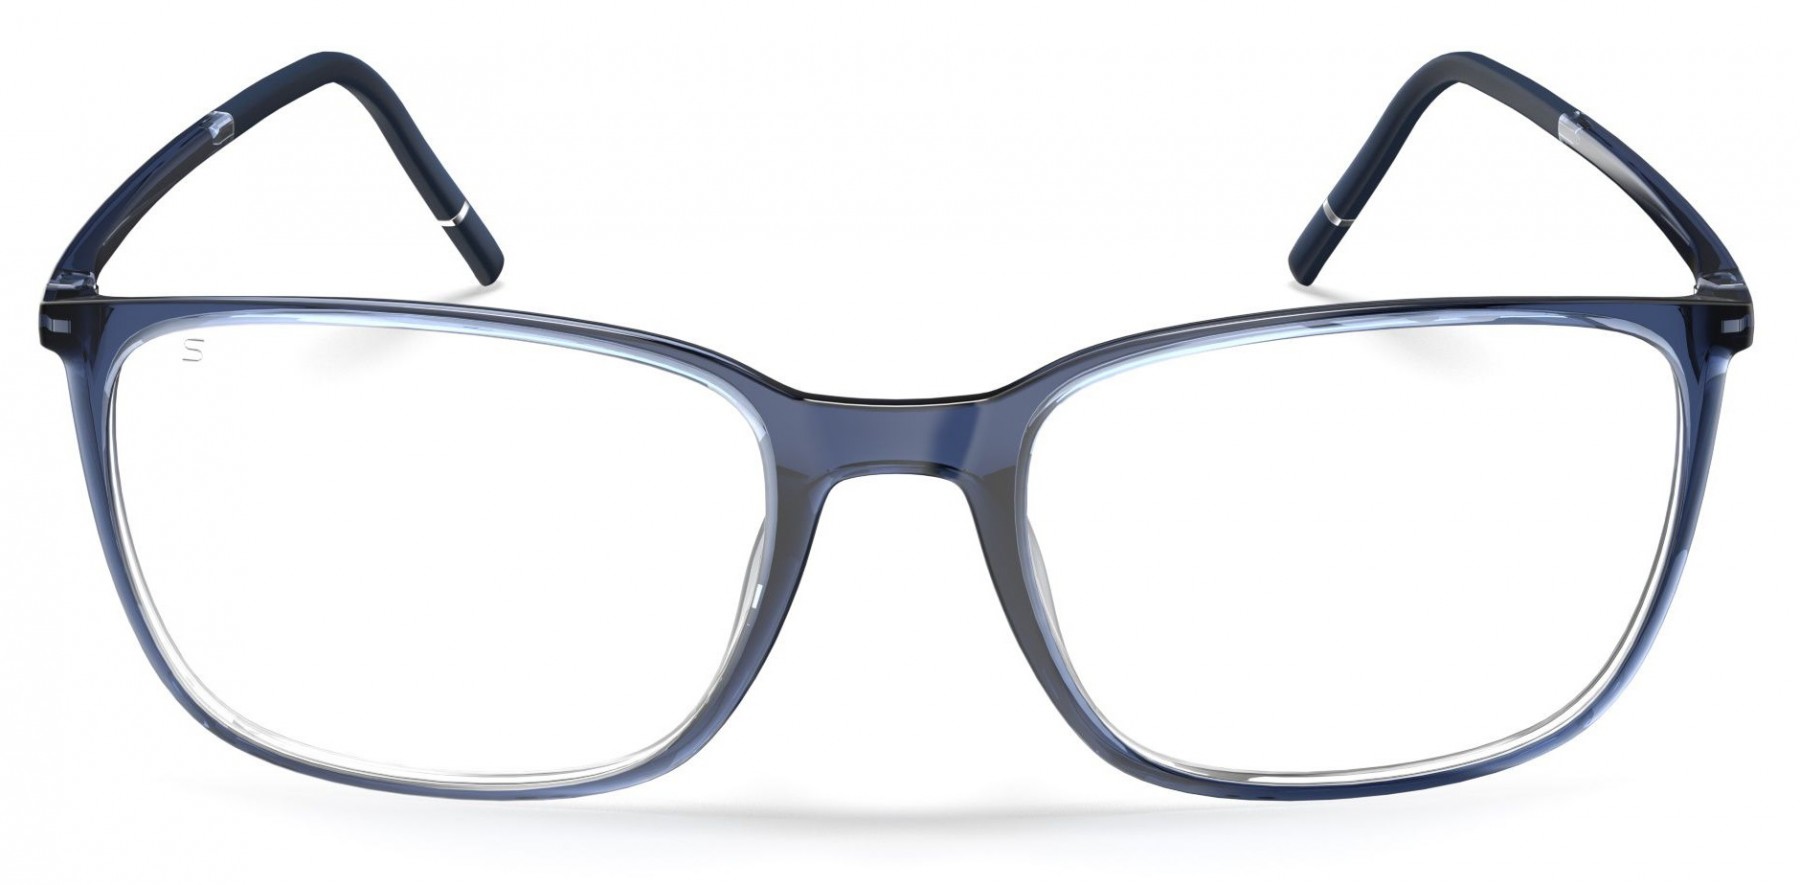 Silhouette 2961 4510 SPX Illusion - Oculos de Grau